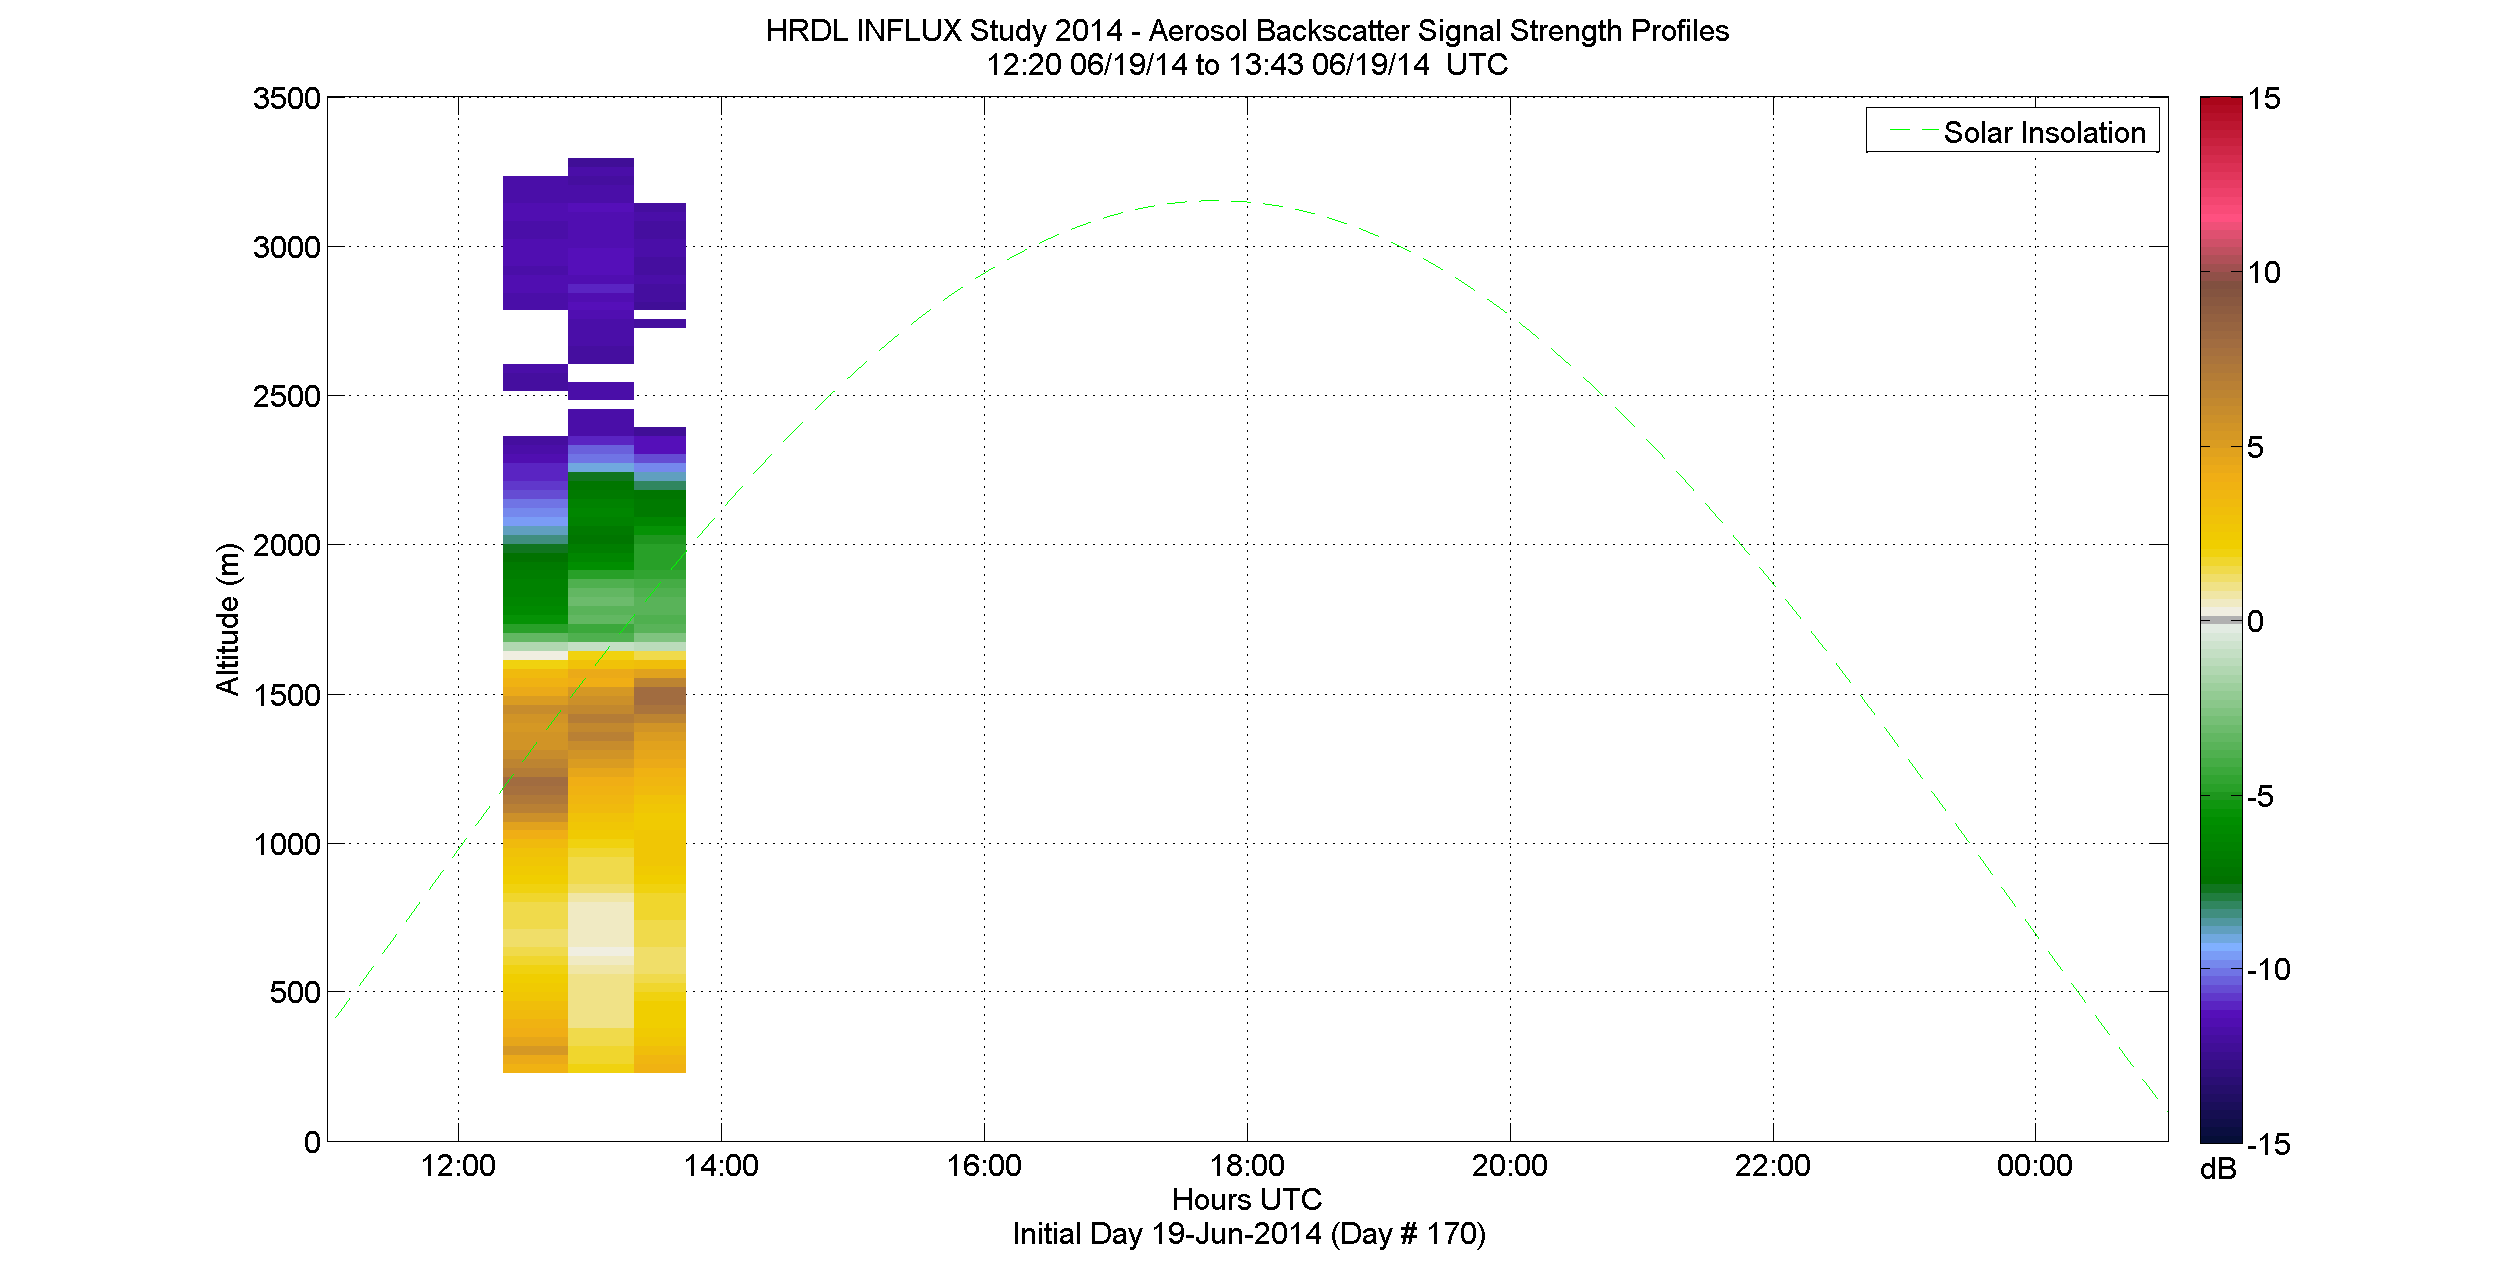 HRDL aerosol backscatter signal strength profile - June 19 pm